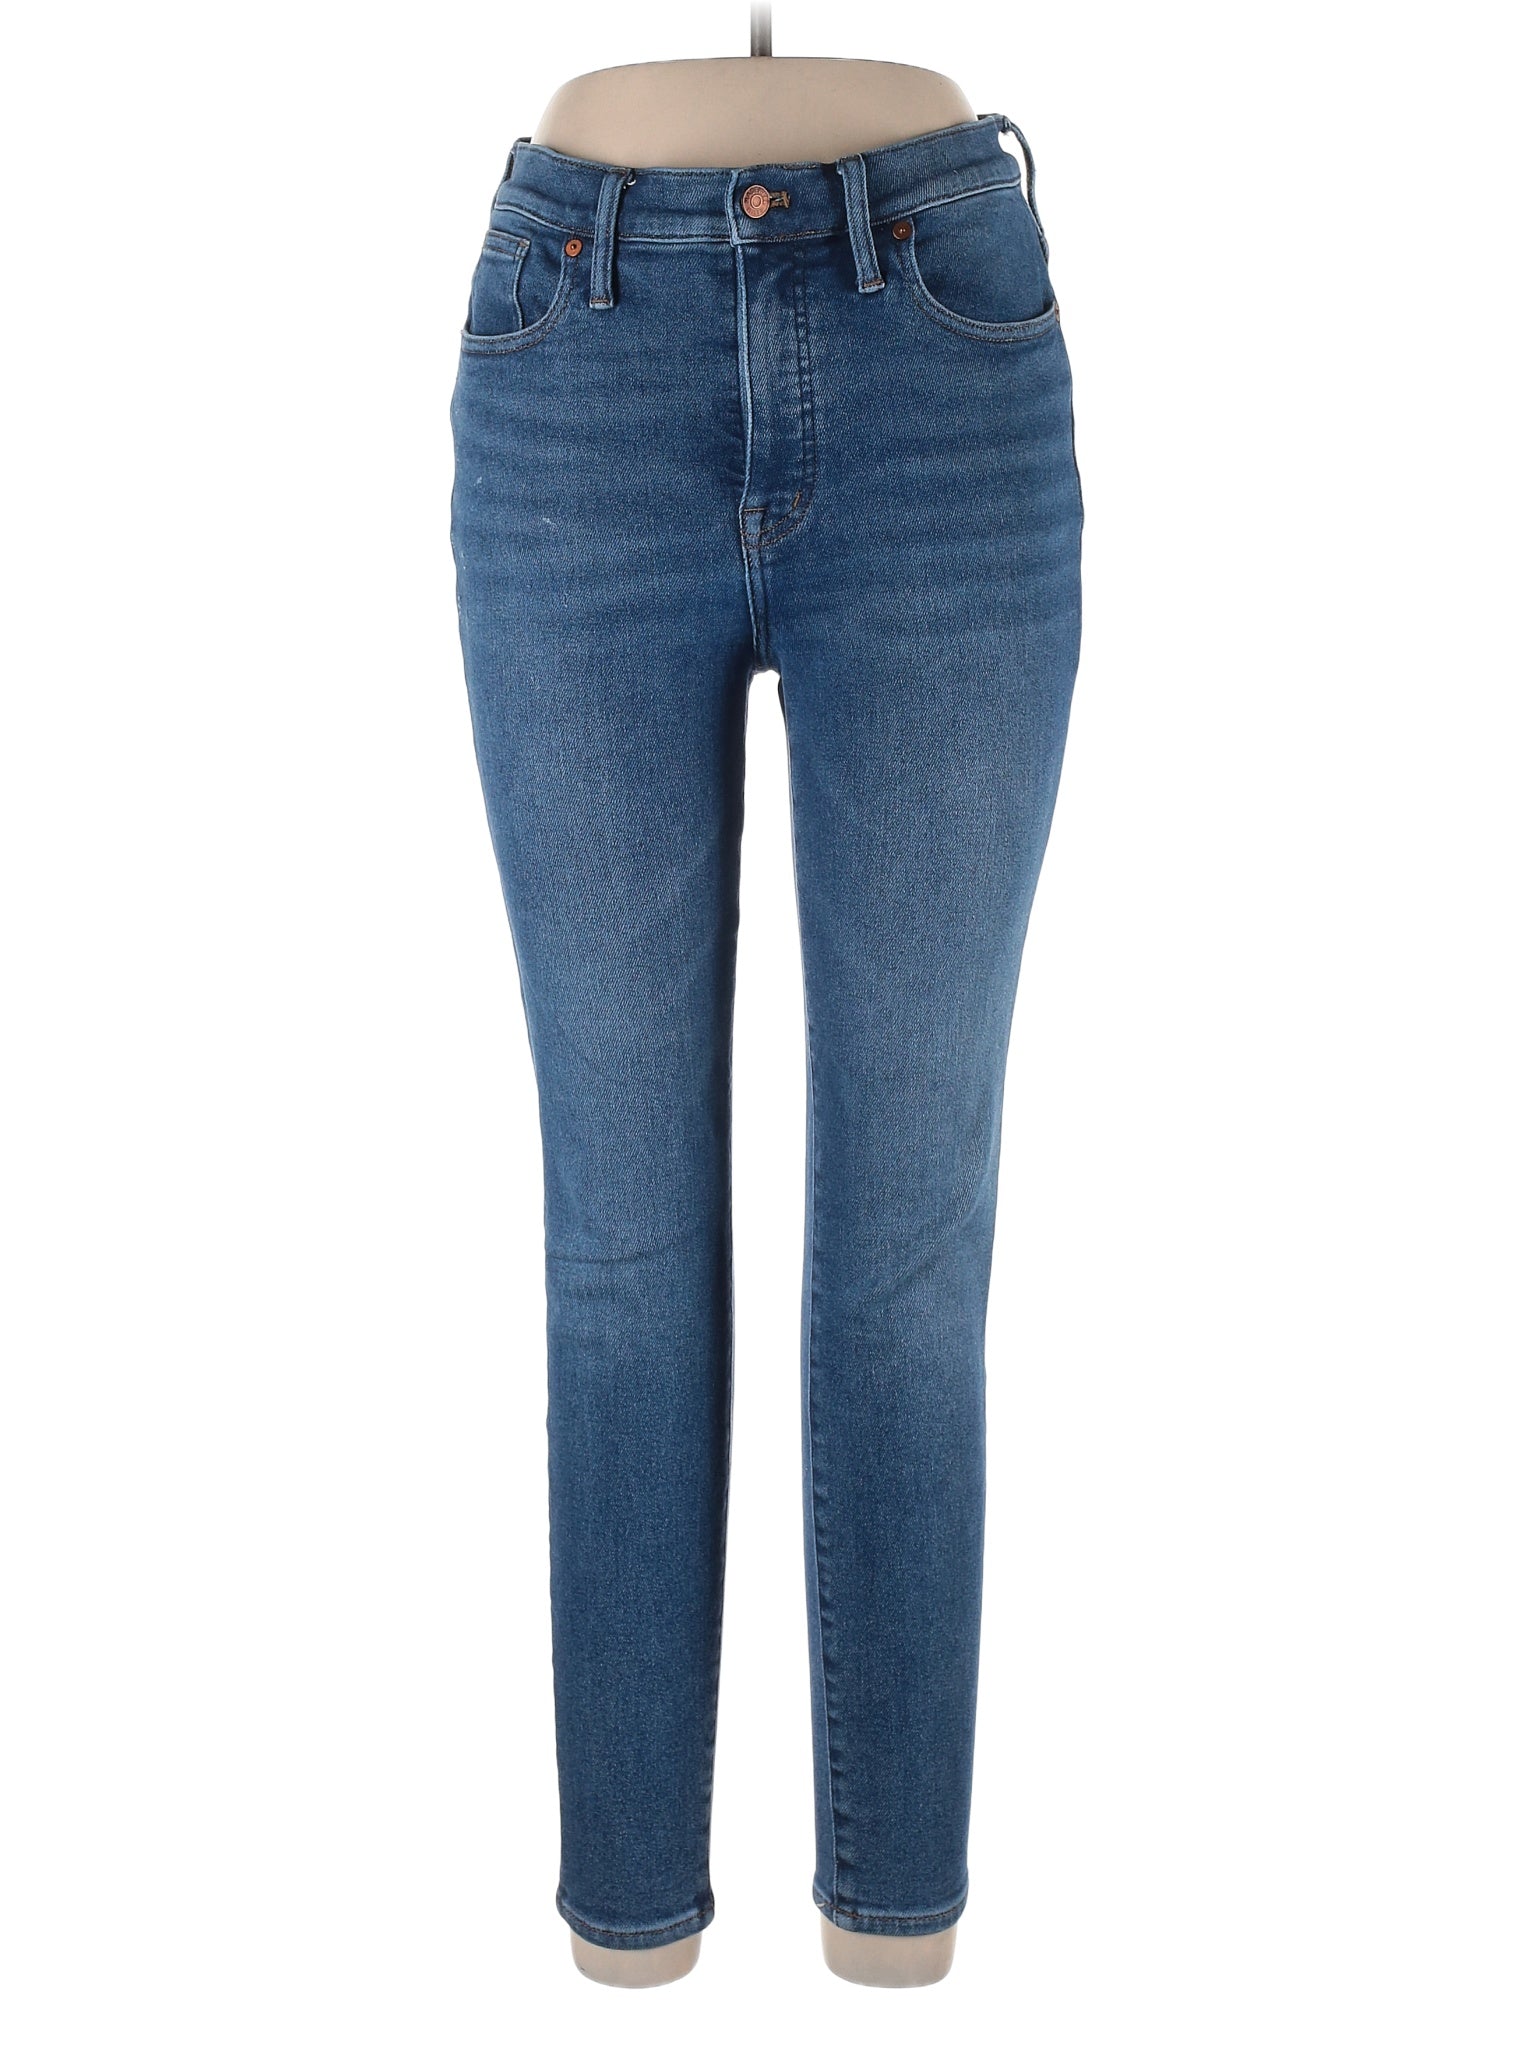 High-Rise Skinny Madewell Jeans 30 in Dark Wash waist size - 30